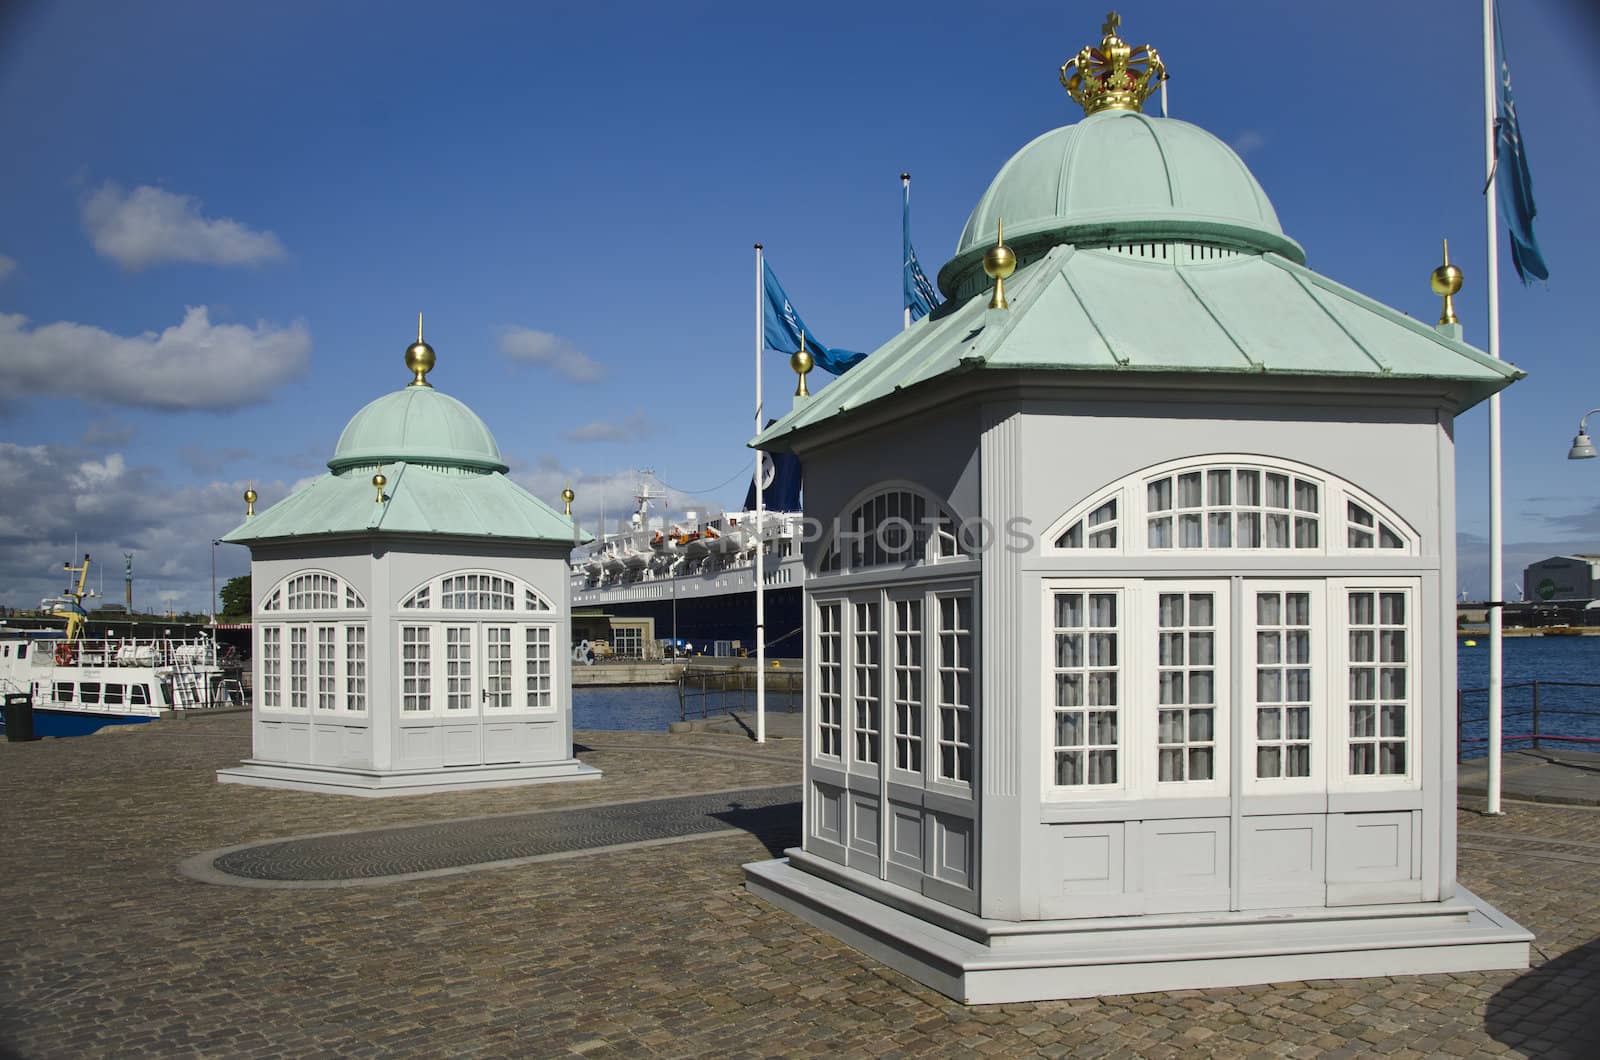 Two buildings on the Copenhagen quayside